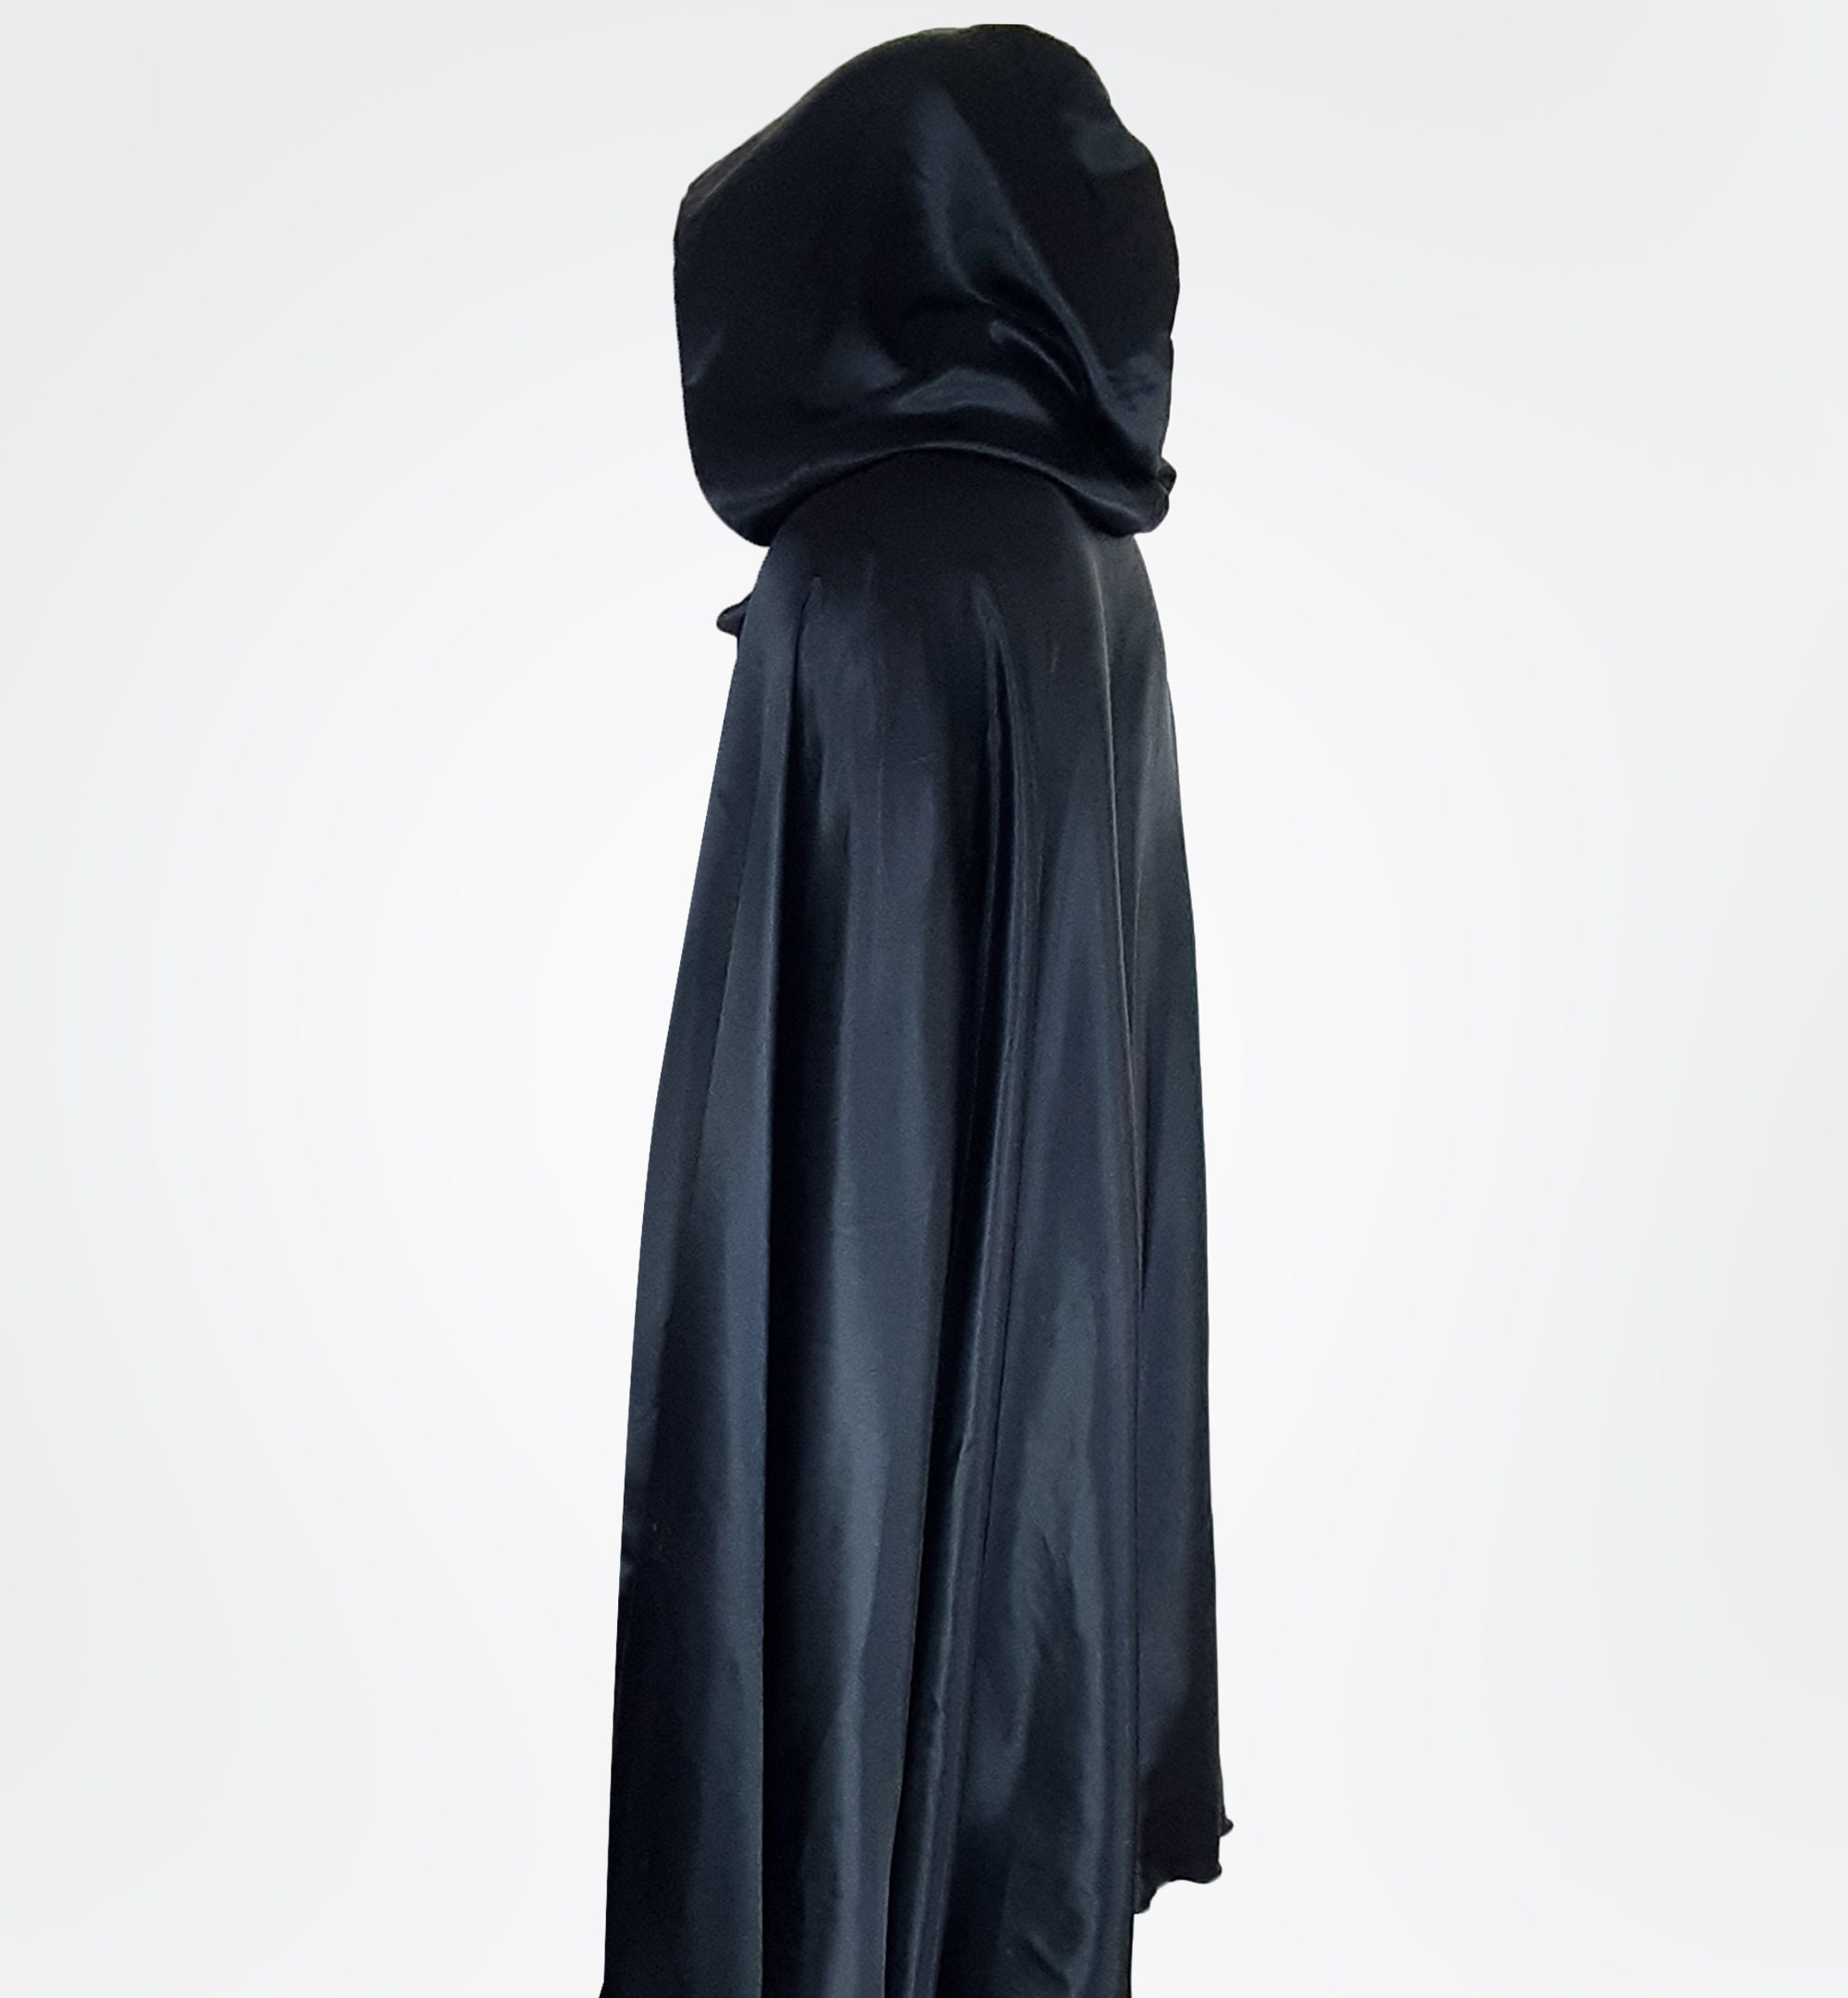 Hooded Cape Cloak Medieval Hooded Cloak Cloak With Hood | Etsy